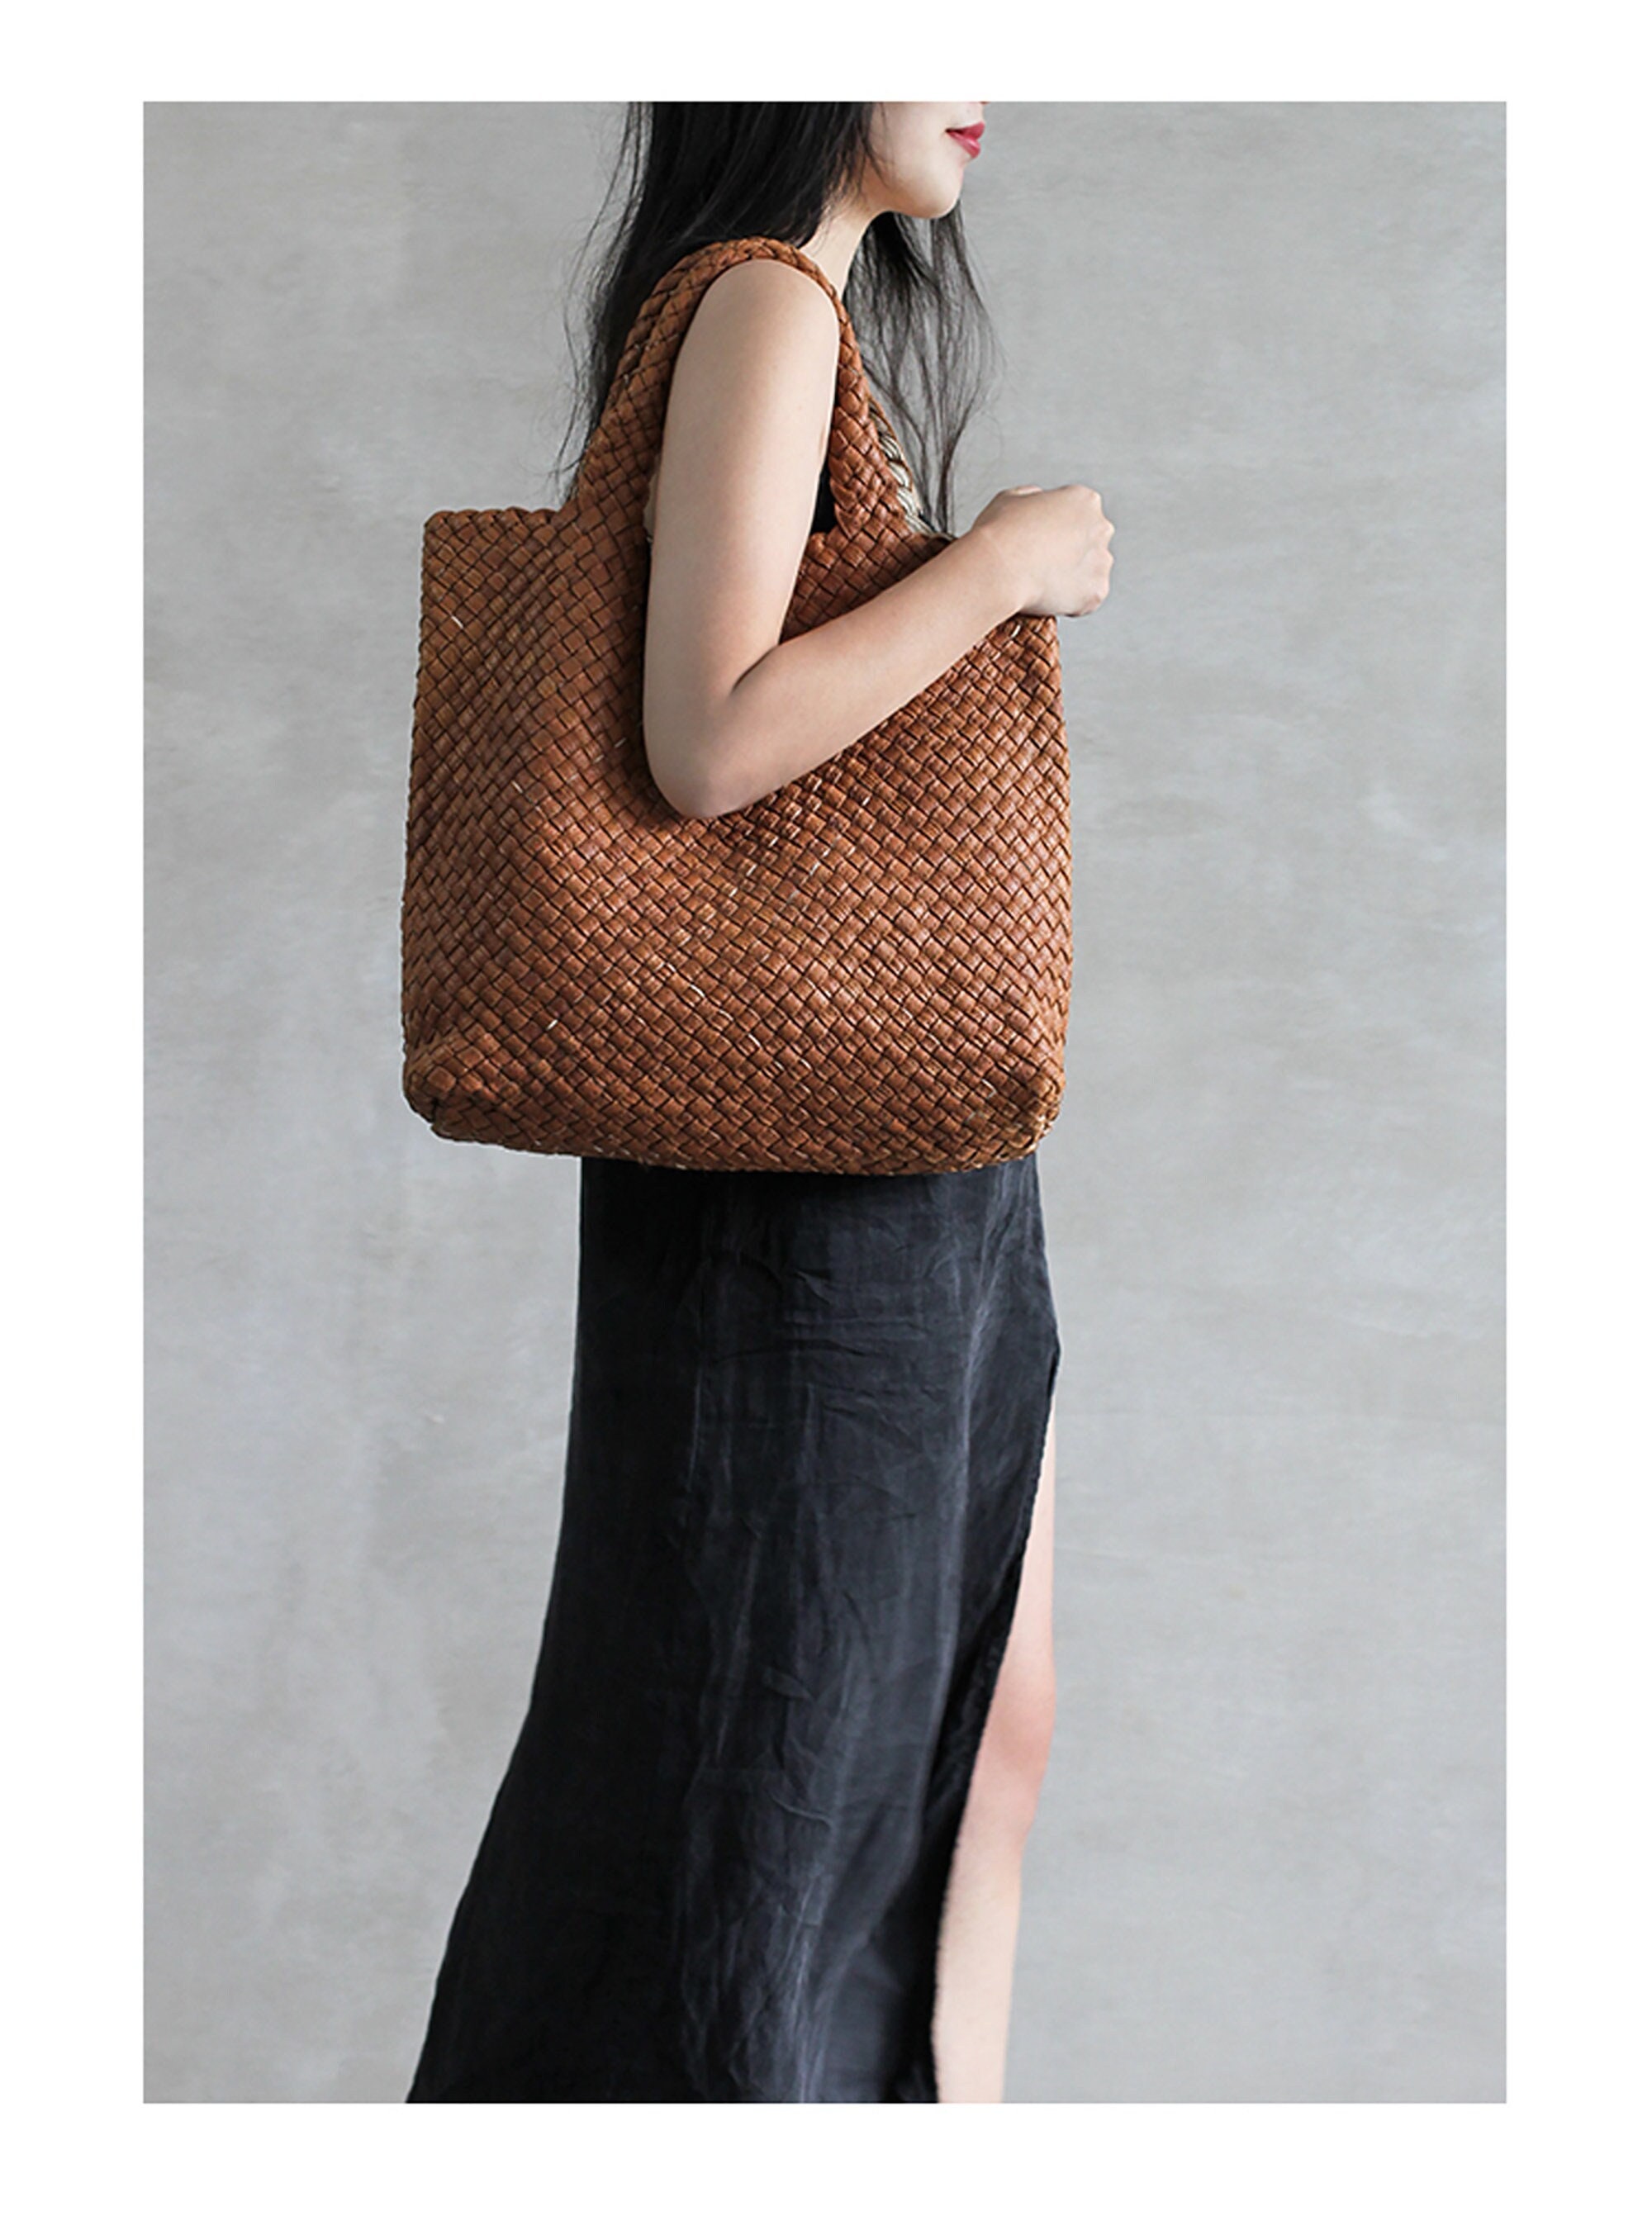 How to Wear a Tote Bag, Crossbody Bag, + Other Handbags - Merrick's Art